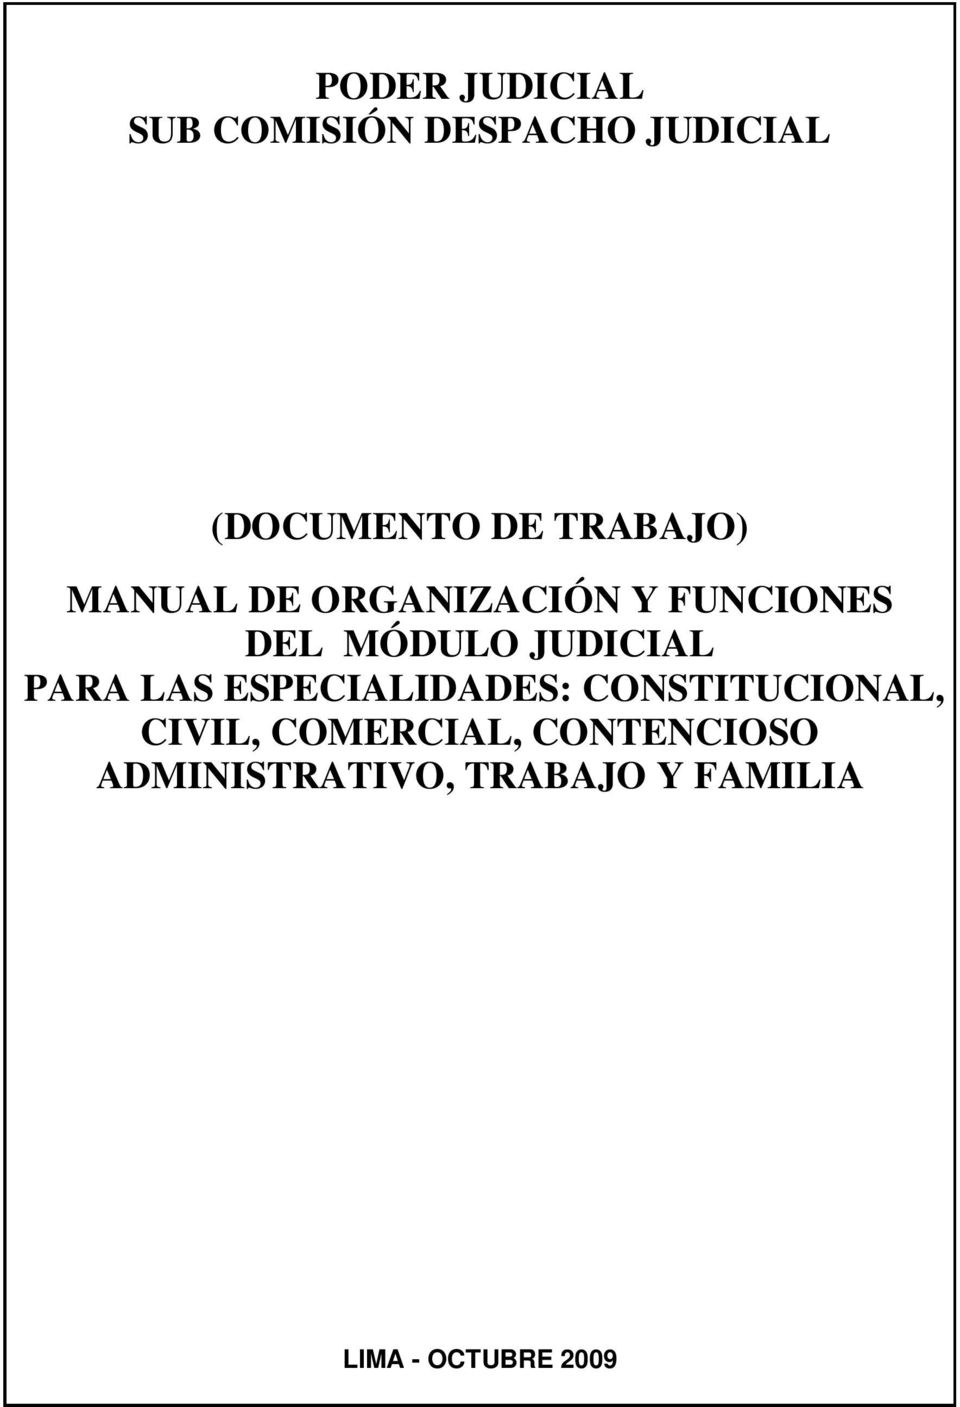 JUDICIAL PARA LAS ESPECIALIDADES: CONSTITUCIONAL, CIVIL,